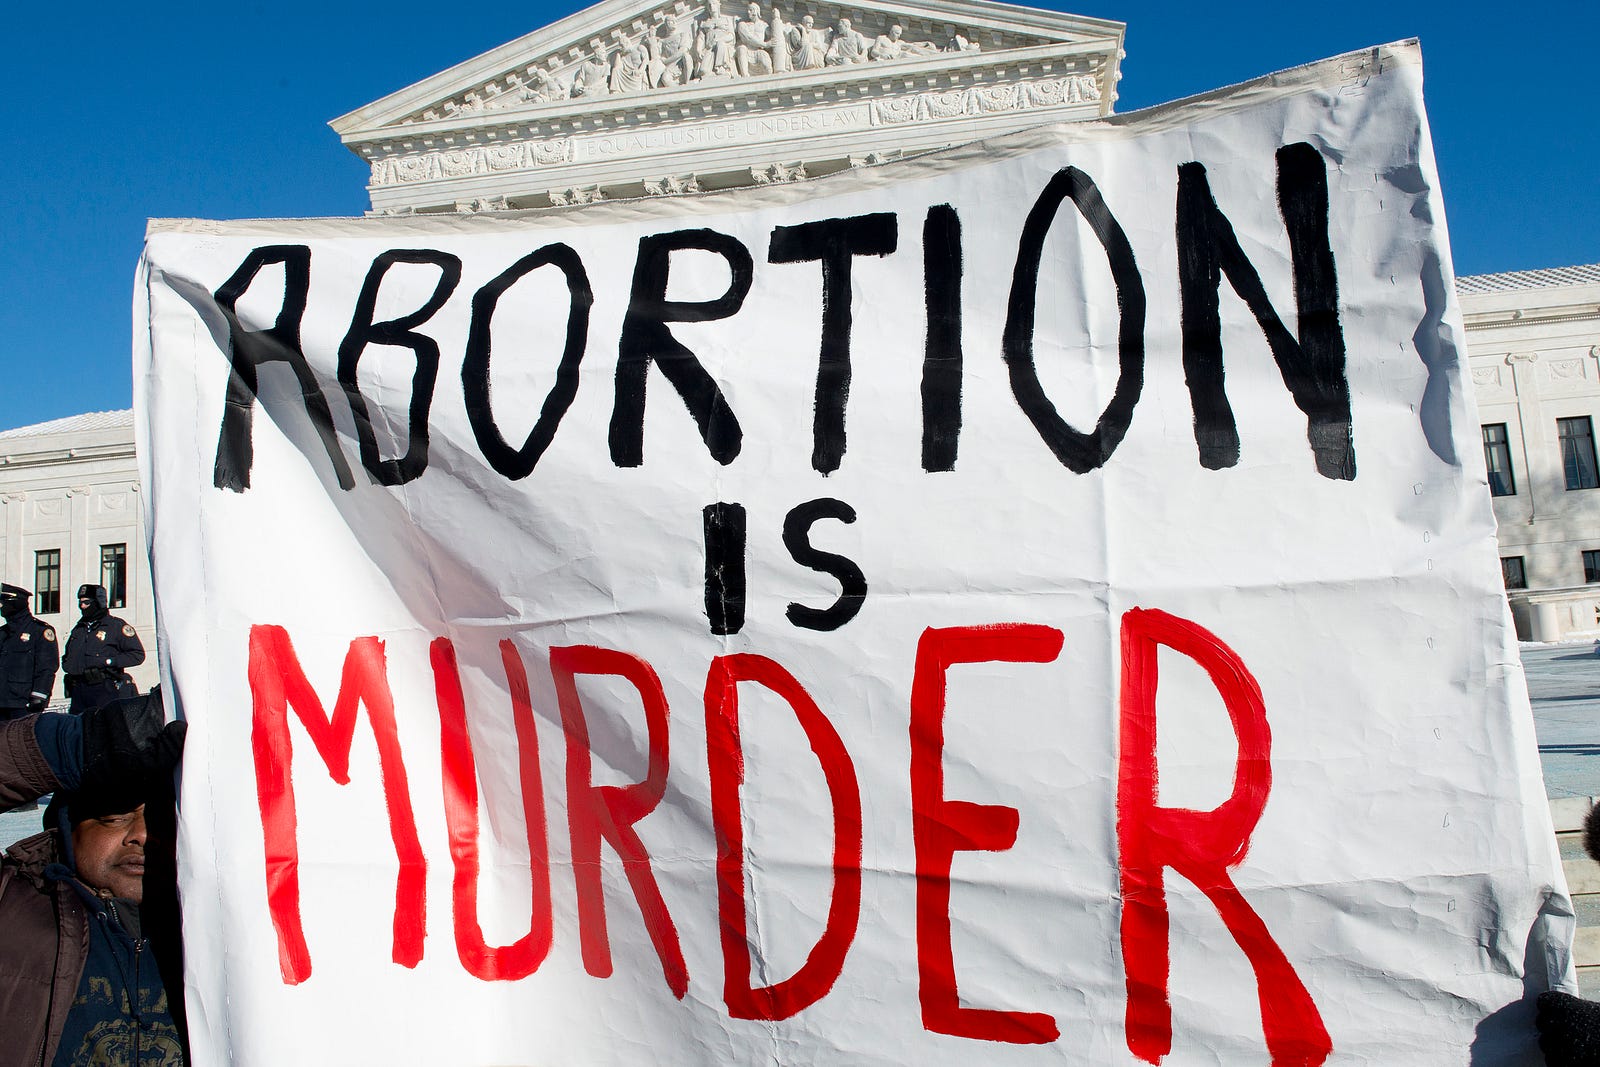 Abortion (murder) synonyms, Abortion (murder) antonyms - blogger.com